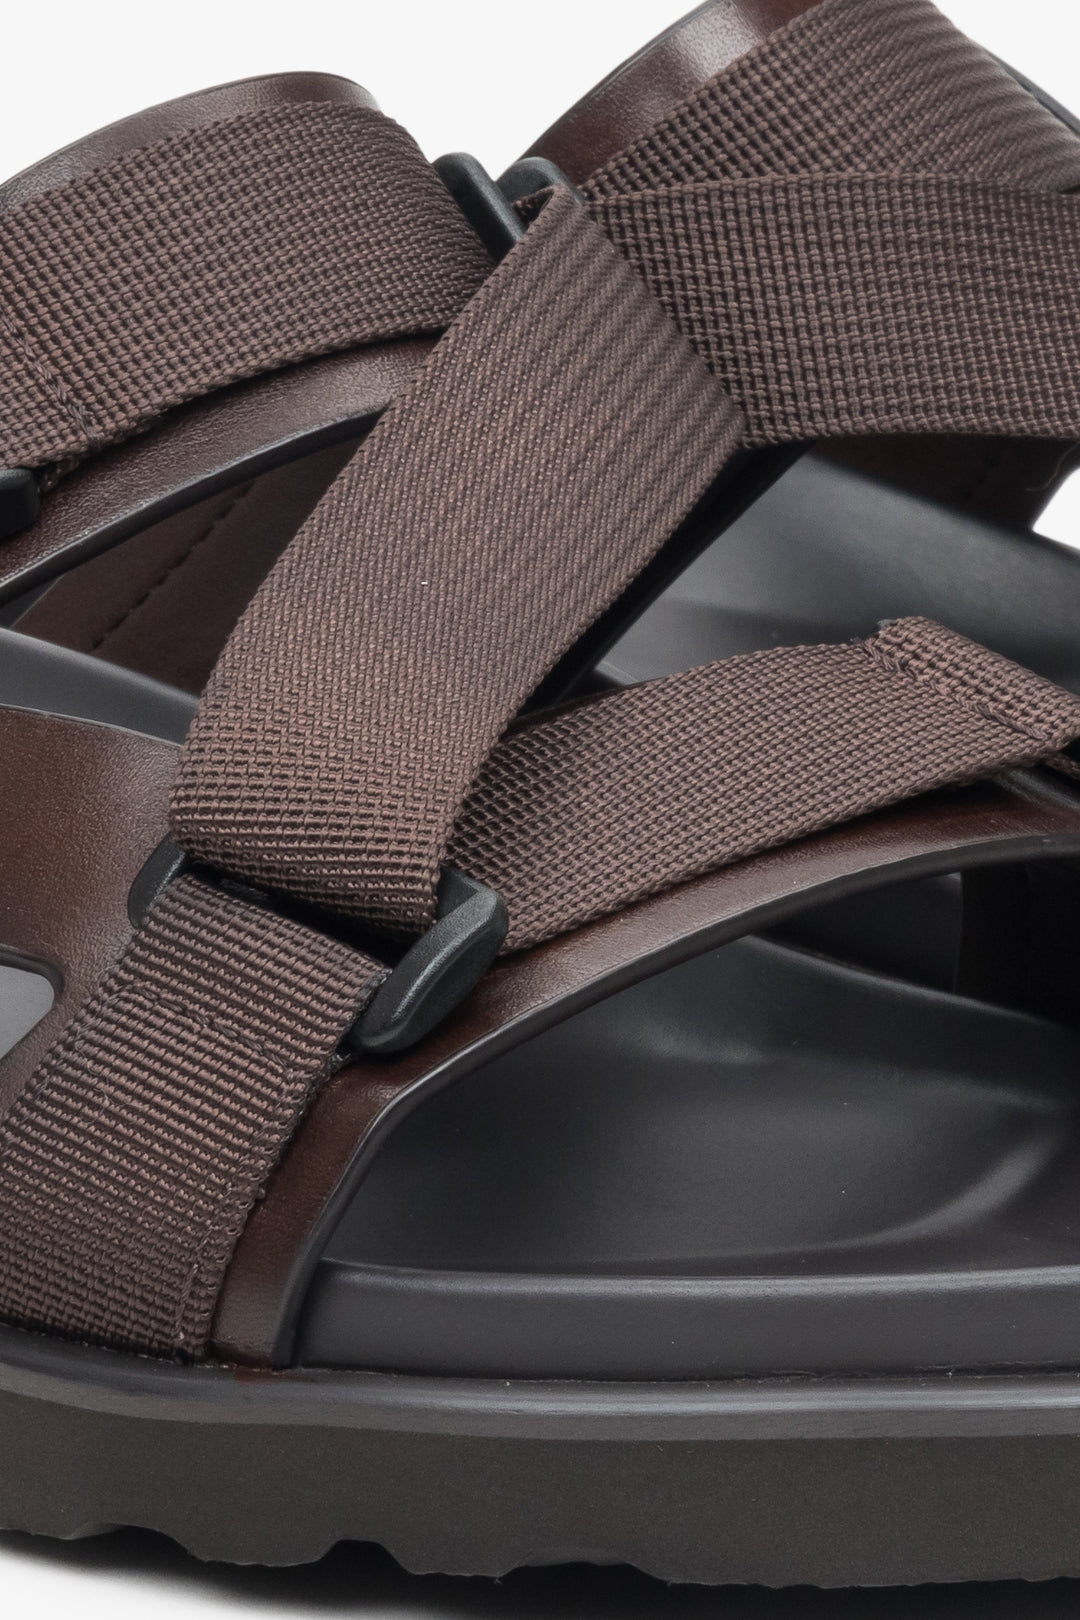 Men's dark brown Estro leather-textile slides - close-up on the fastening system.